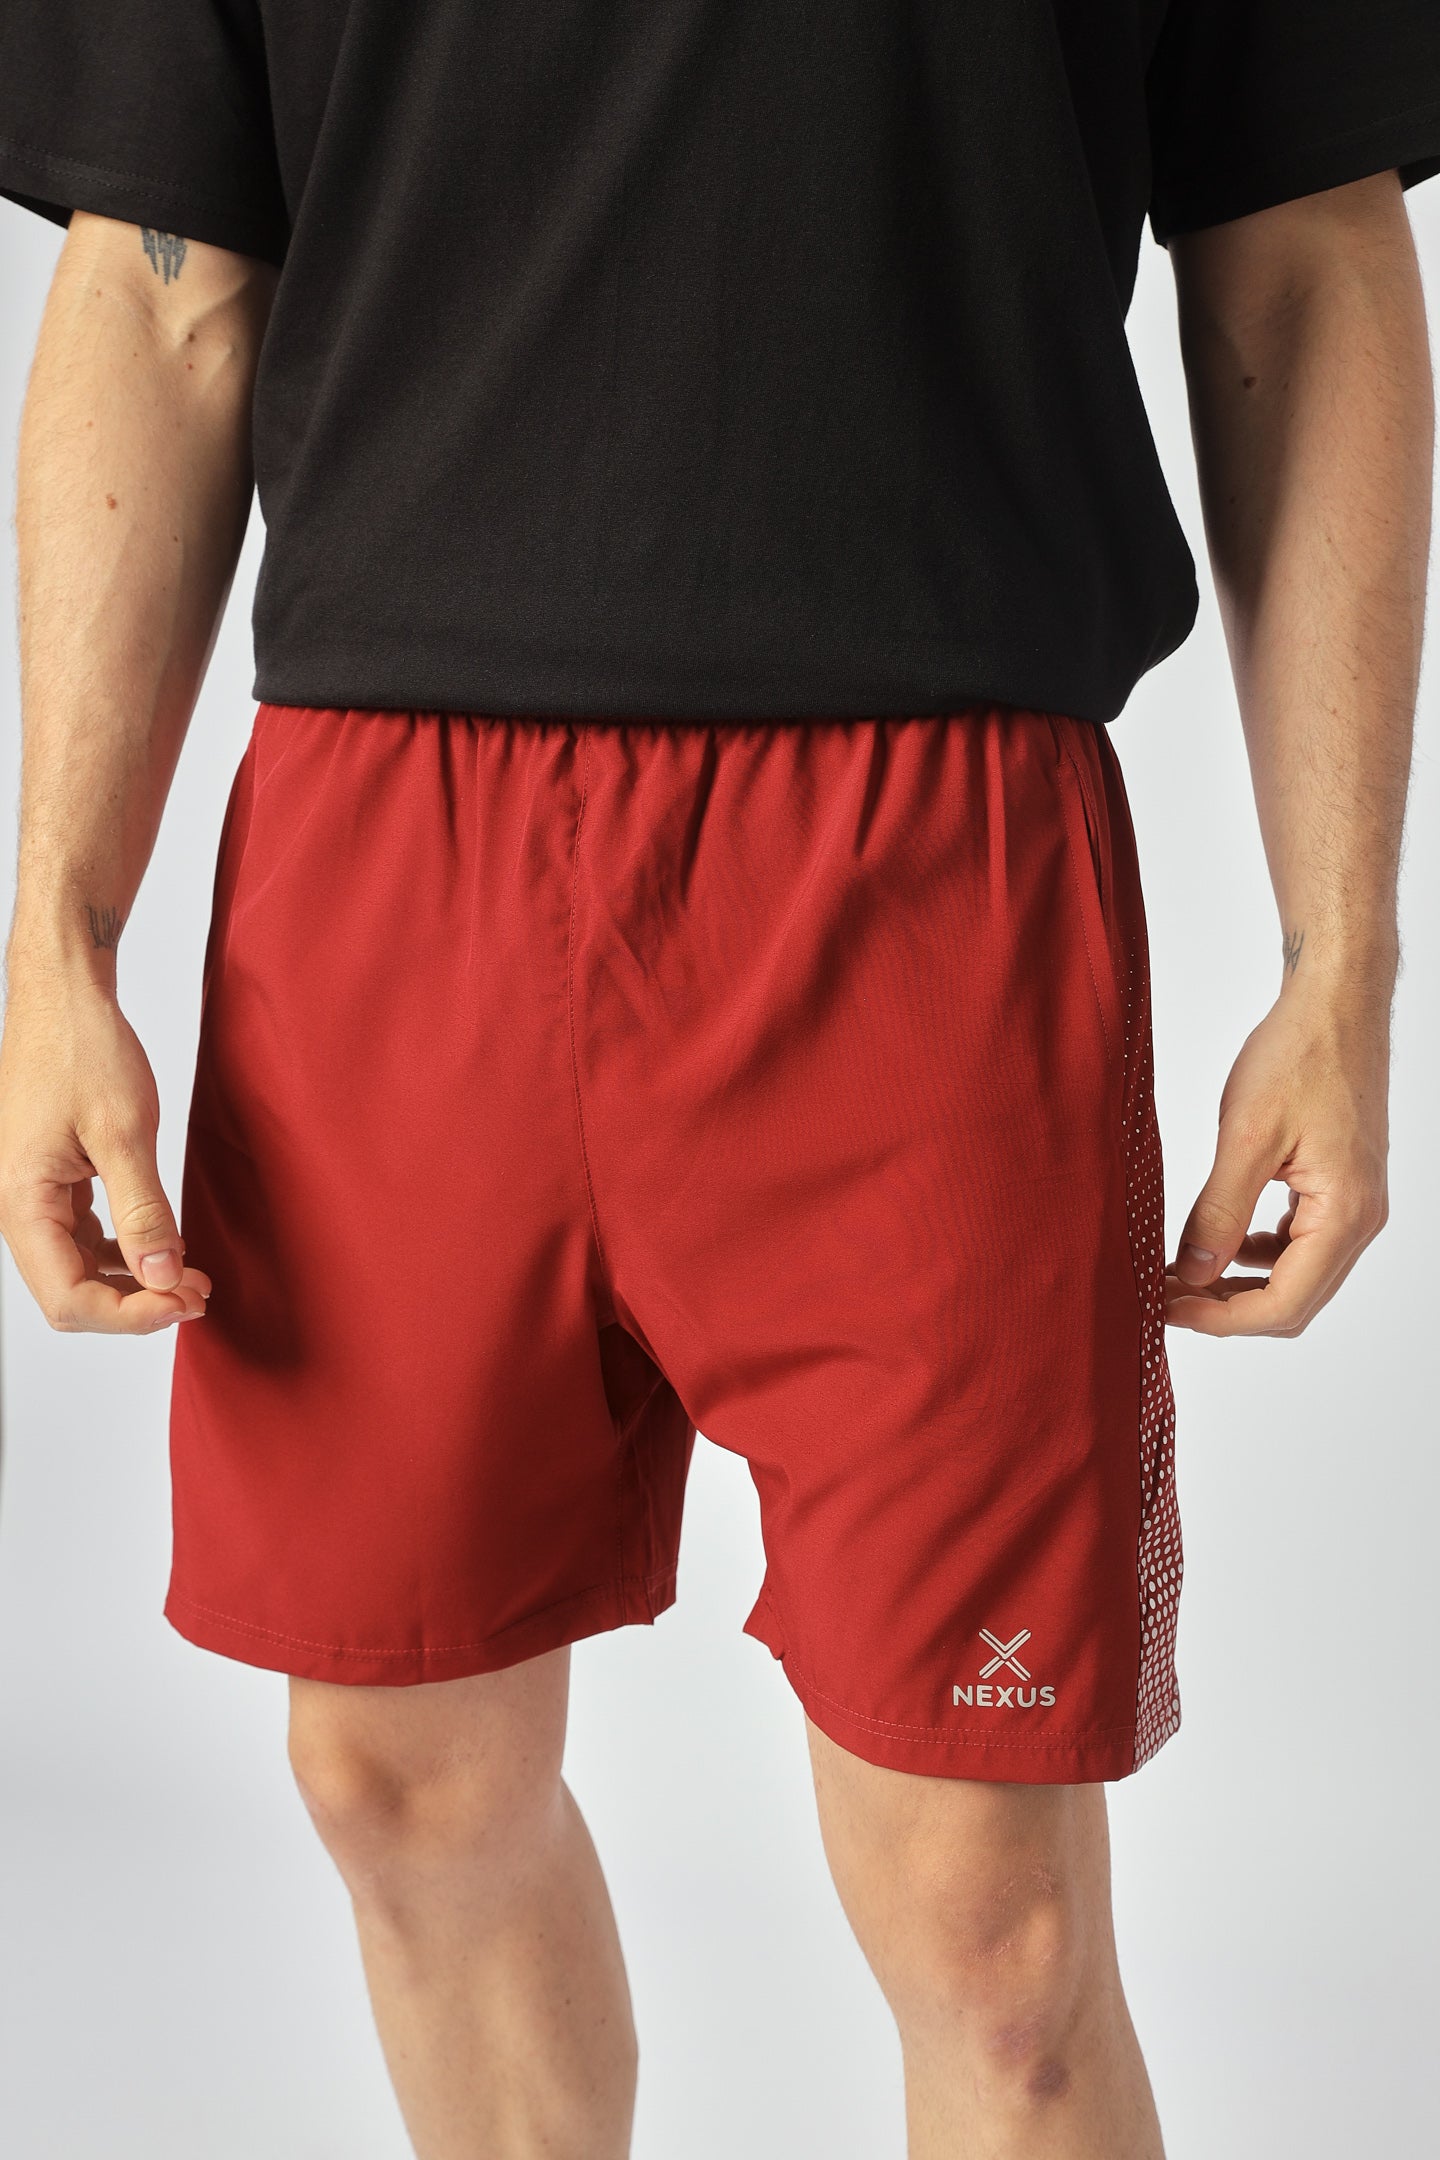 Nexus Clothing Men Basic Solid Mesh Breathable Mesh Shorts (Red)